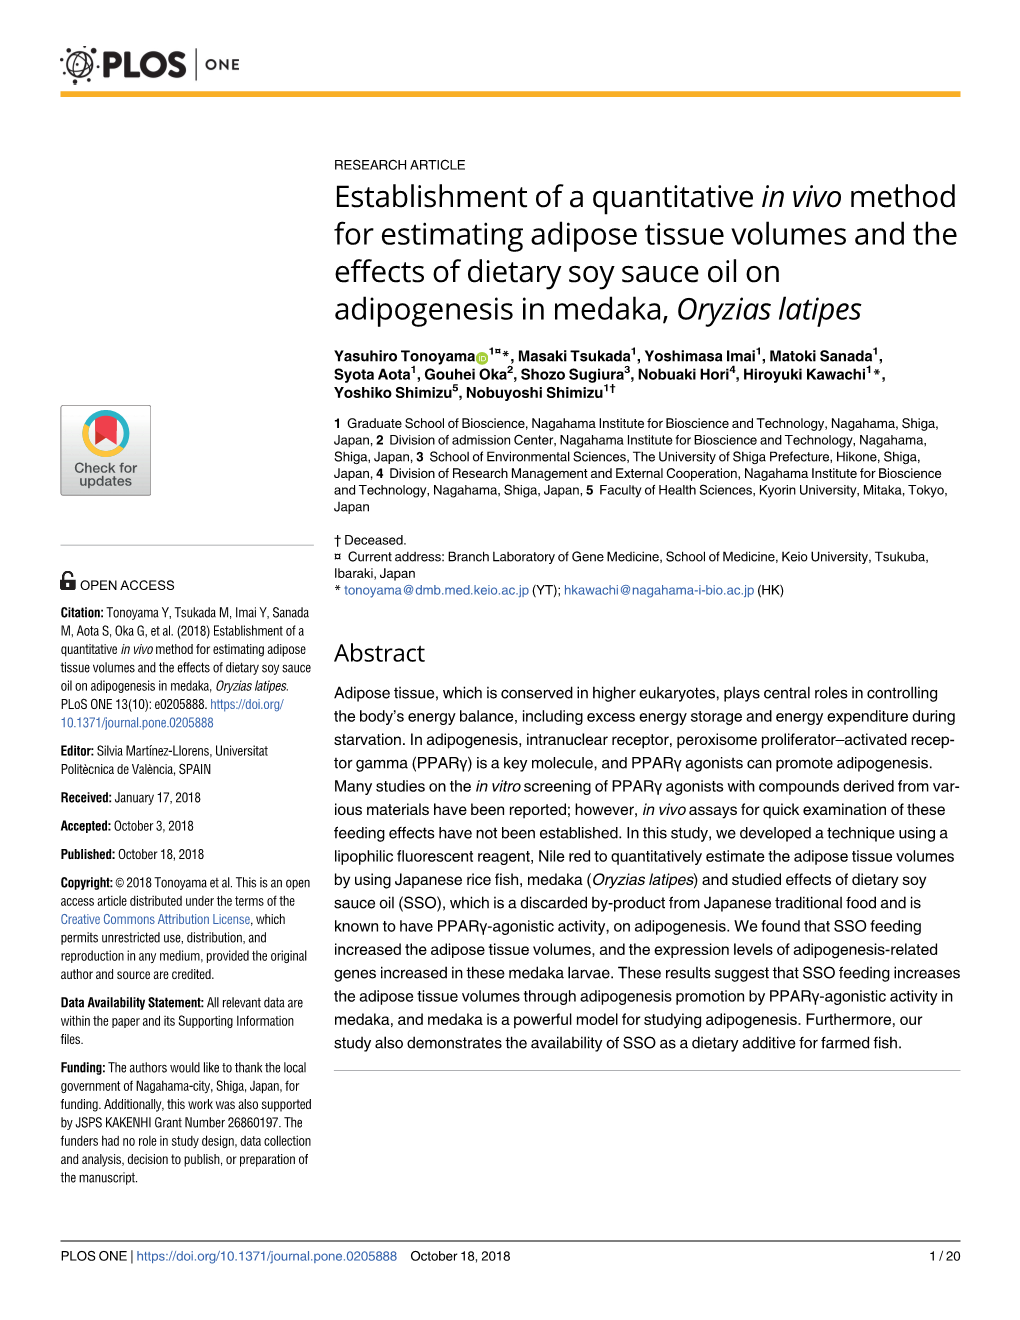 Establishment of a Quantitative in Vivo Method for Estimating Adipose